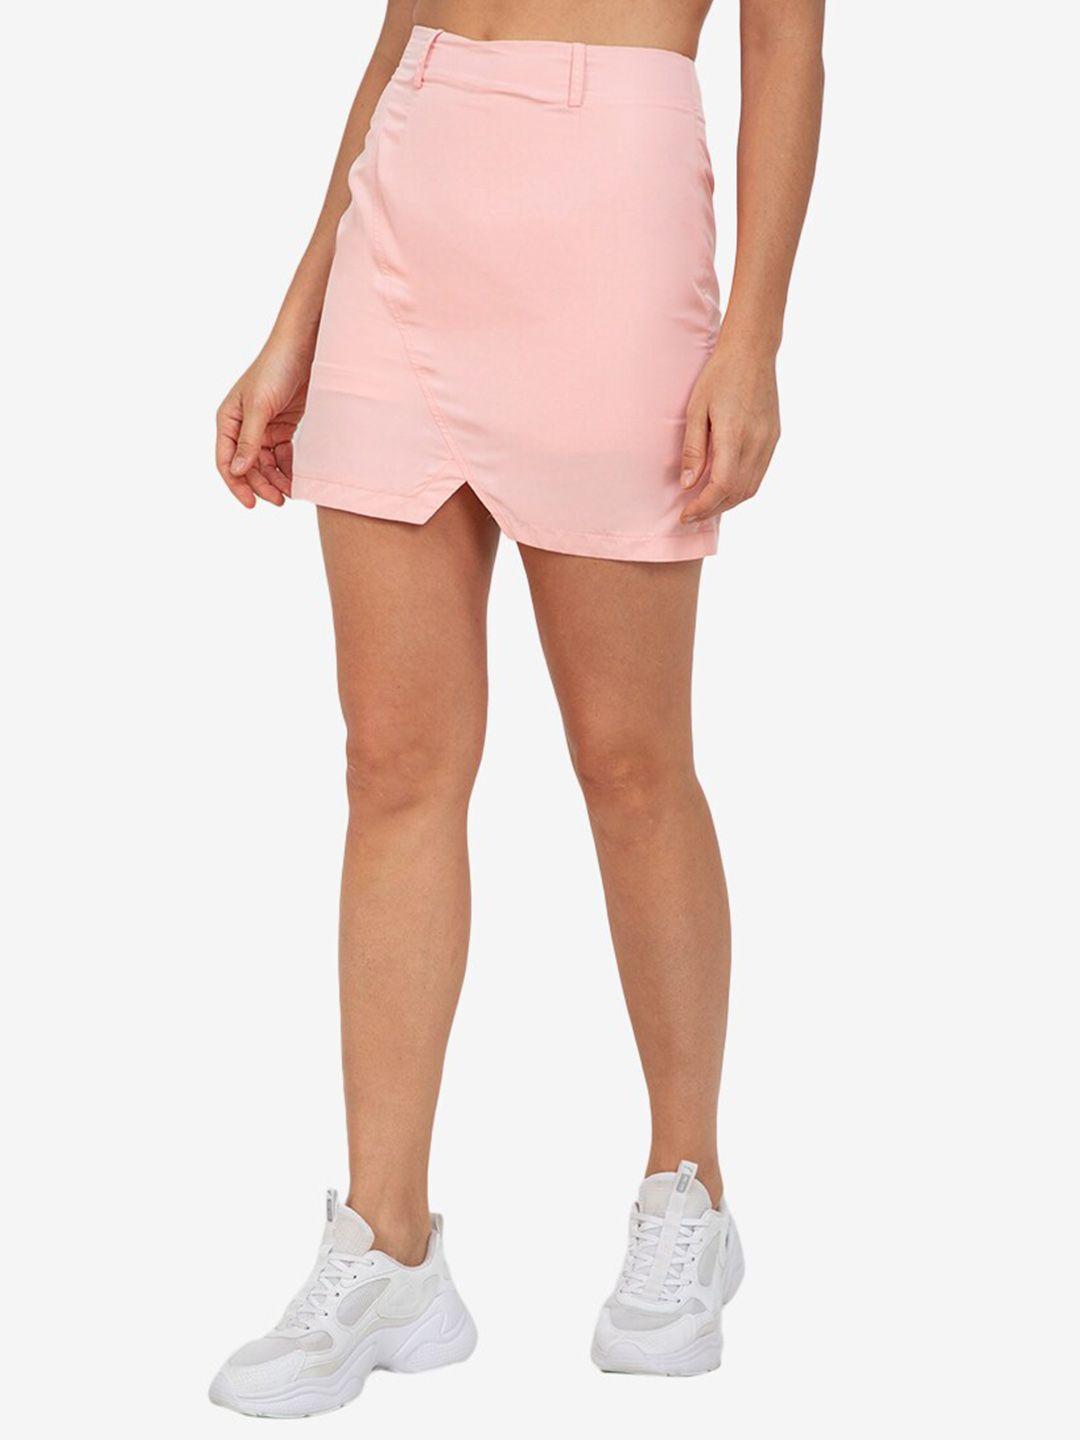 zalora basics pink solid golf skirt